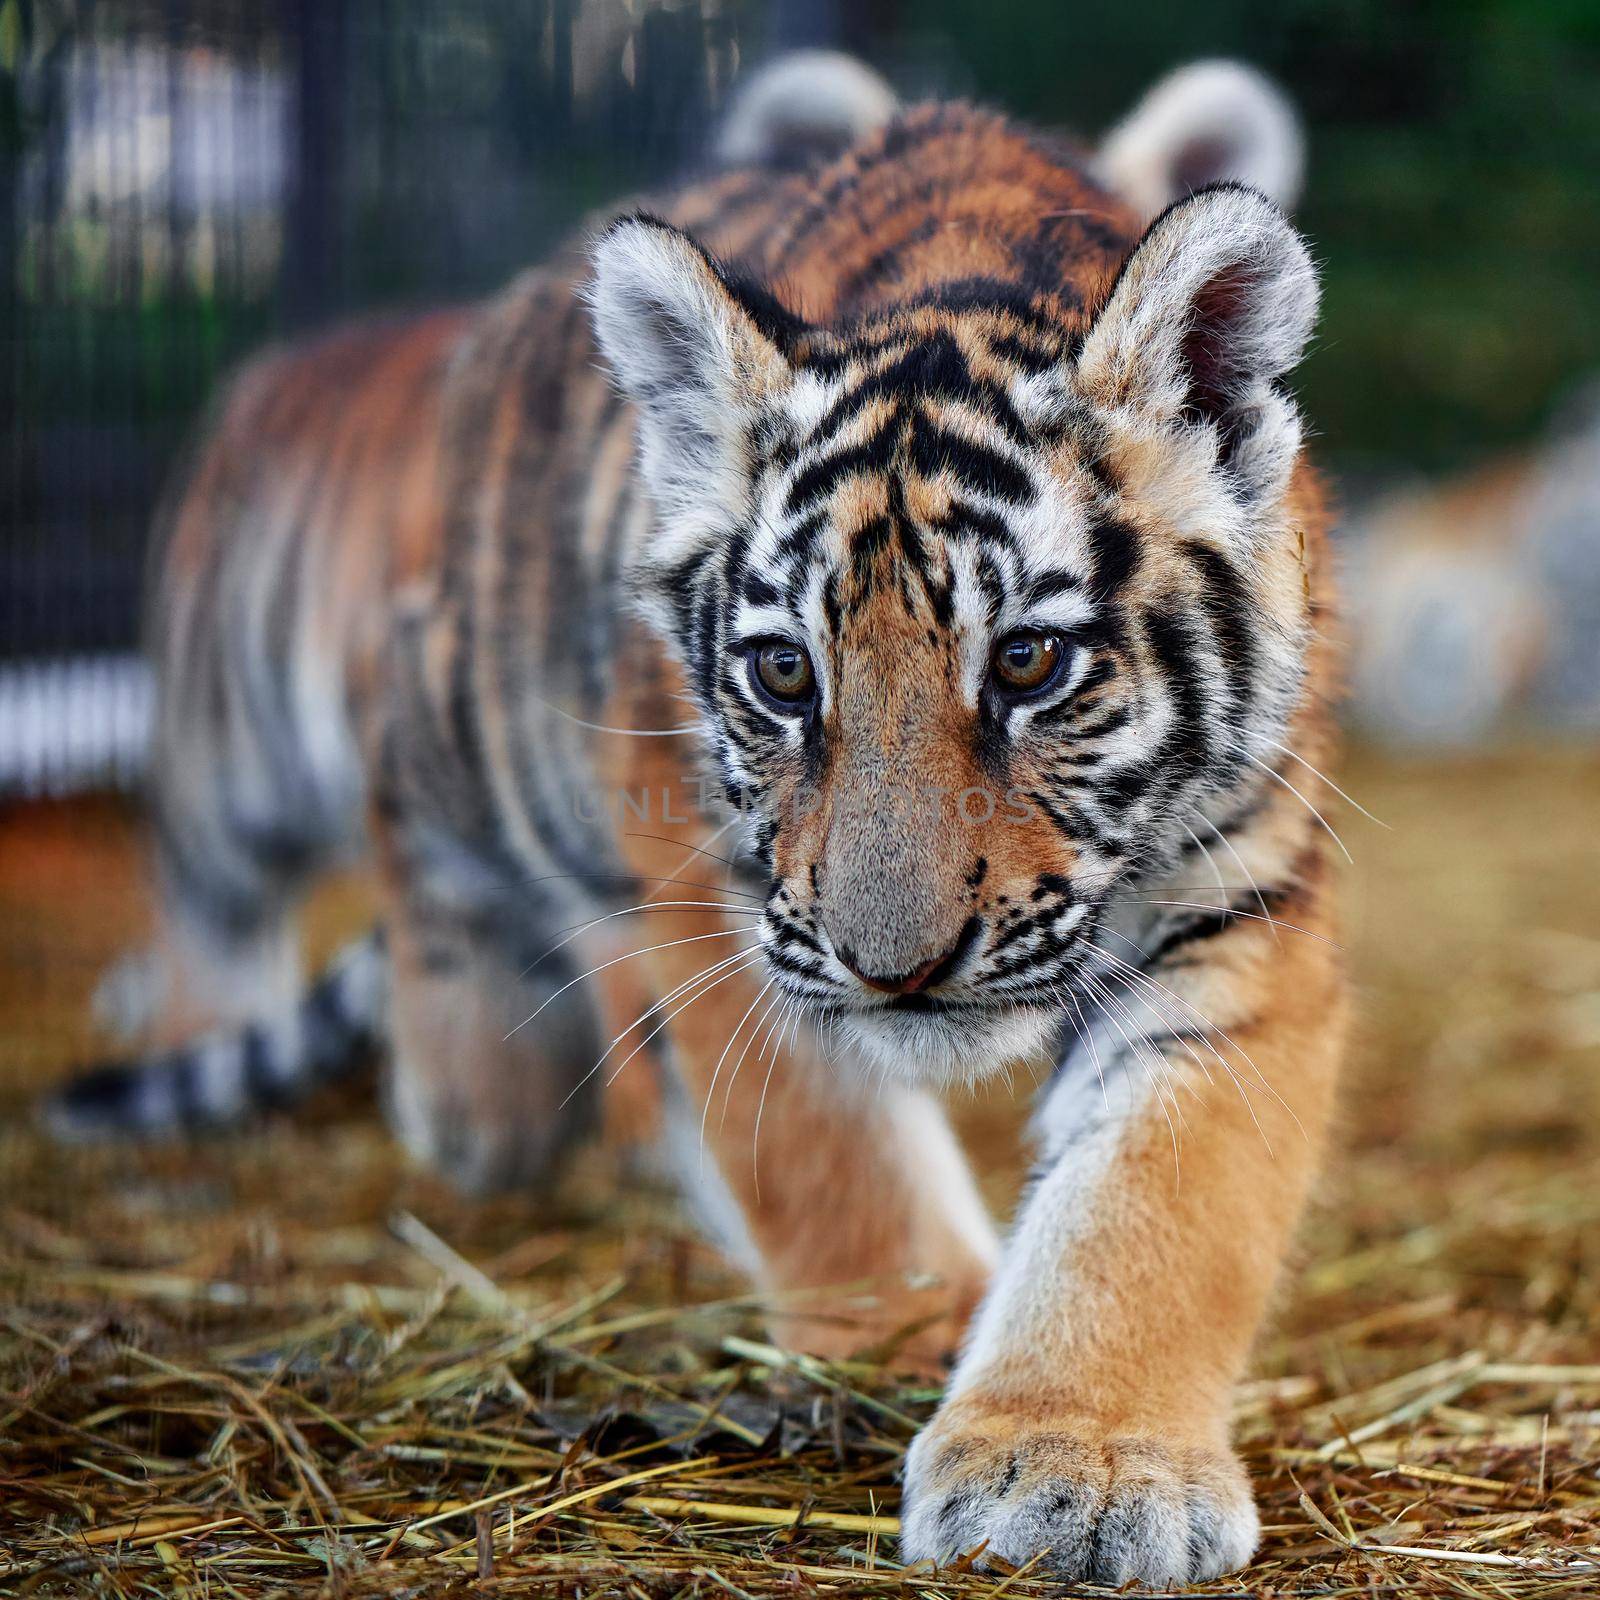 Pretty Tiger cub portrait. Tiger playing around (Panthera tigris)